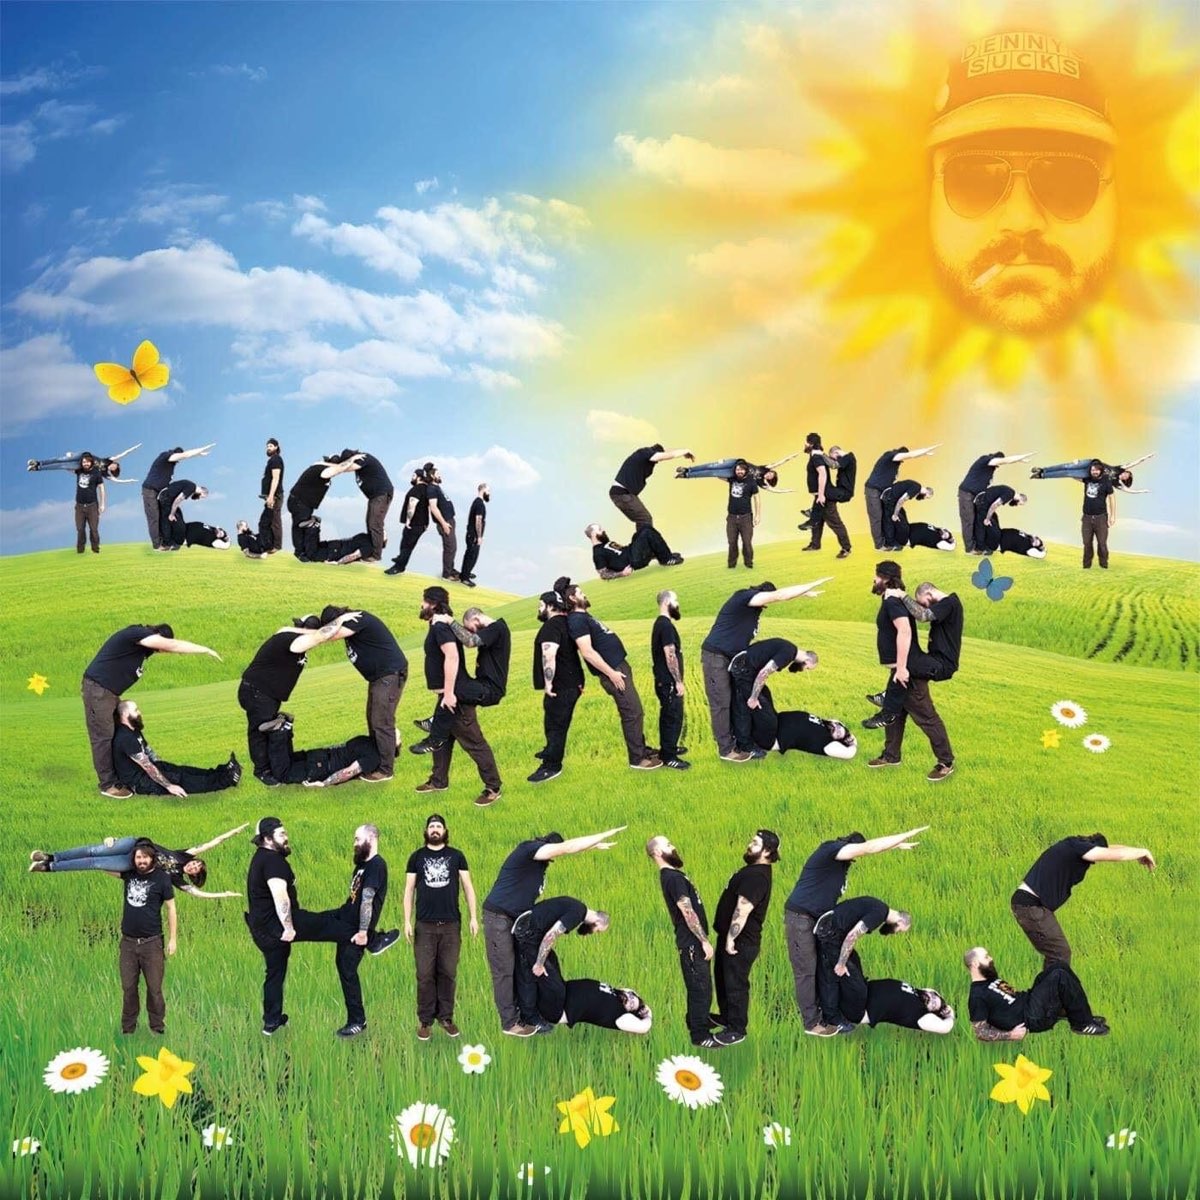 Street corner thieves. Tejon Street Corner Thieves. Tejon Street Corner Thieves Whiskey. Tejon Street Corner Thieves группа. Tejon Street Corner Thieves every last Drop.